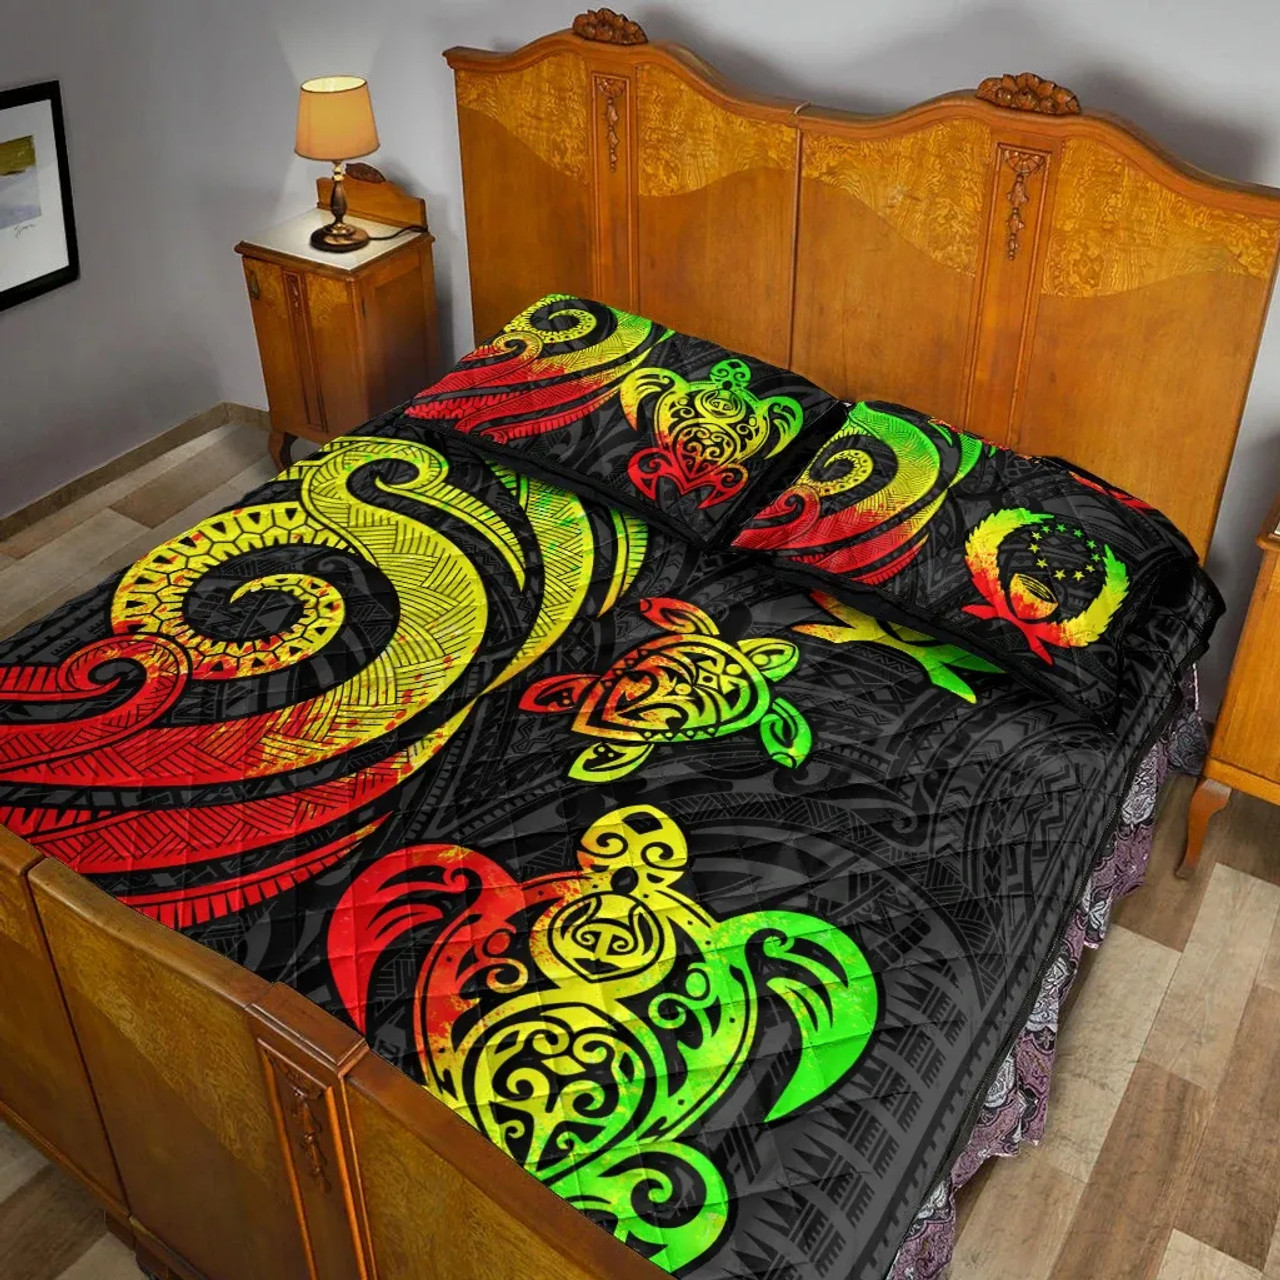 Pohnpei Quilt Bed Set - Reggae Tentacle Turtle 2